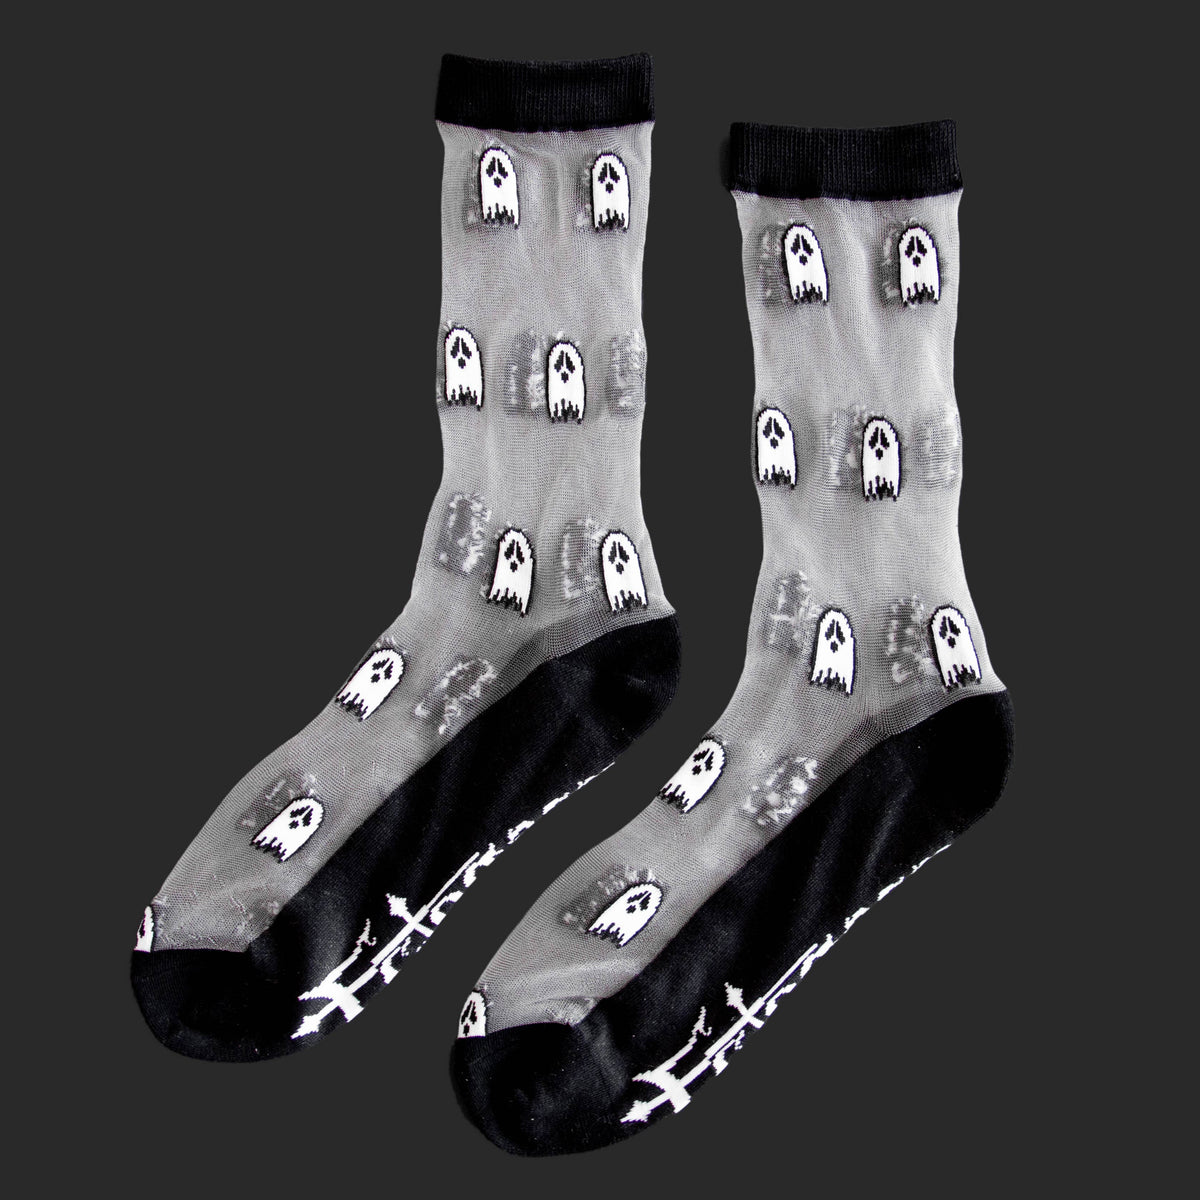 Sheer Ghost Crew Socks in Black and White for Halloween